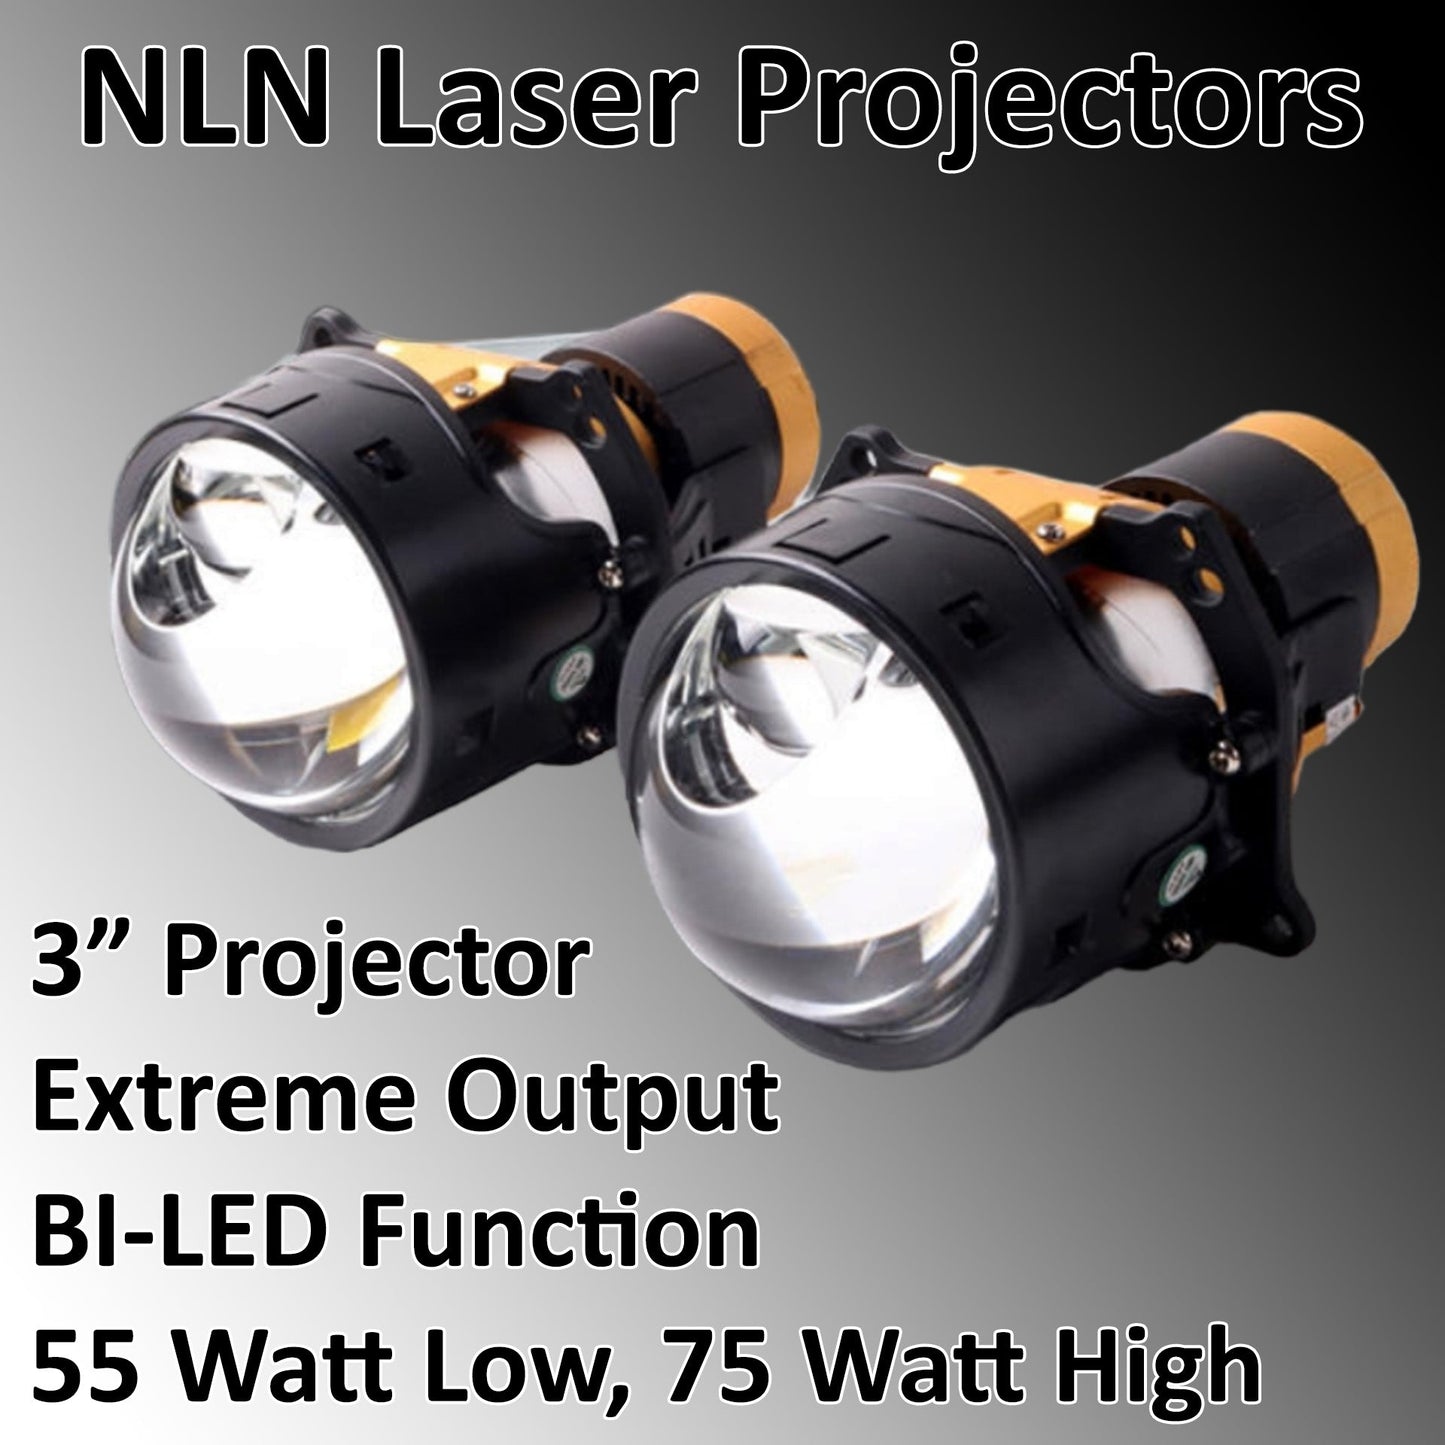 NLN 3" Laser Projectors